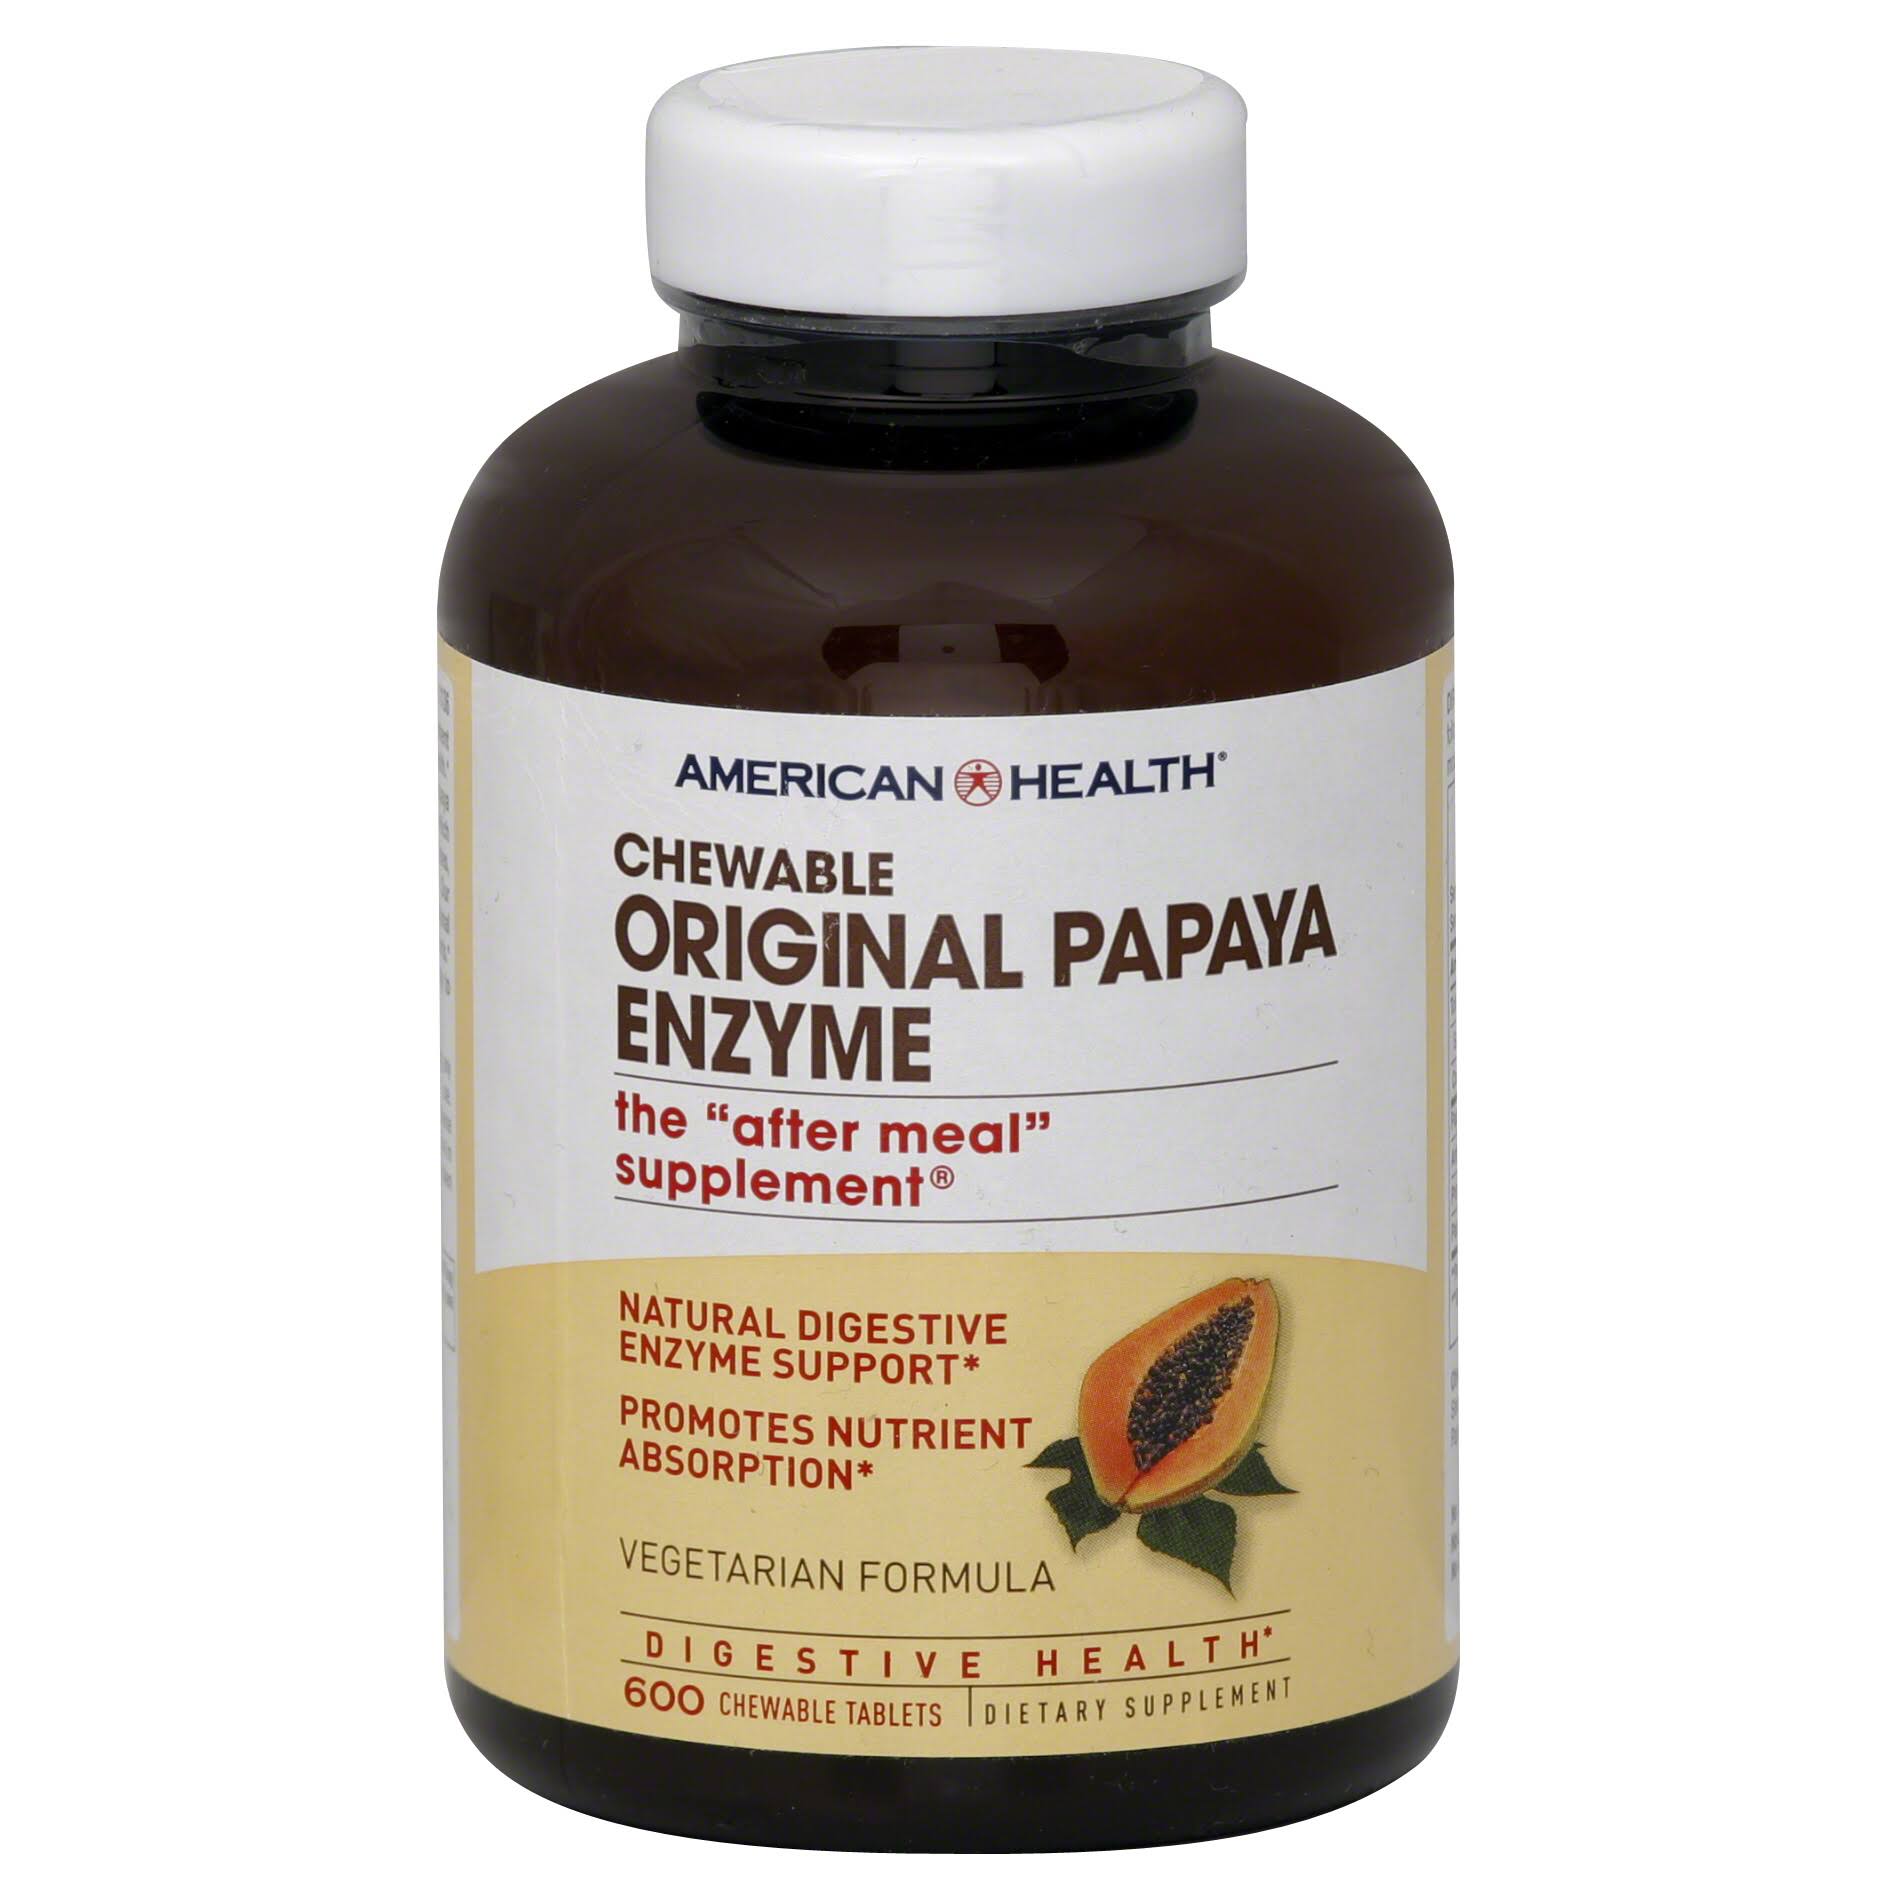 American Health Original Papaya Enzyme - 600 Chewable Tablets